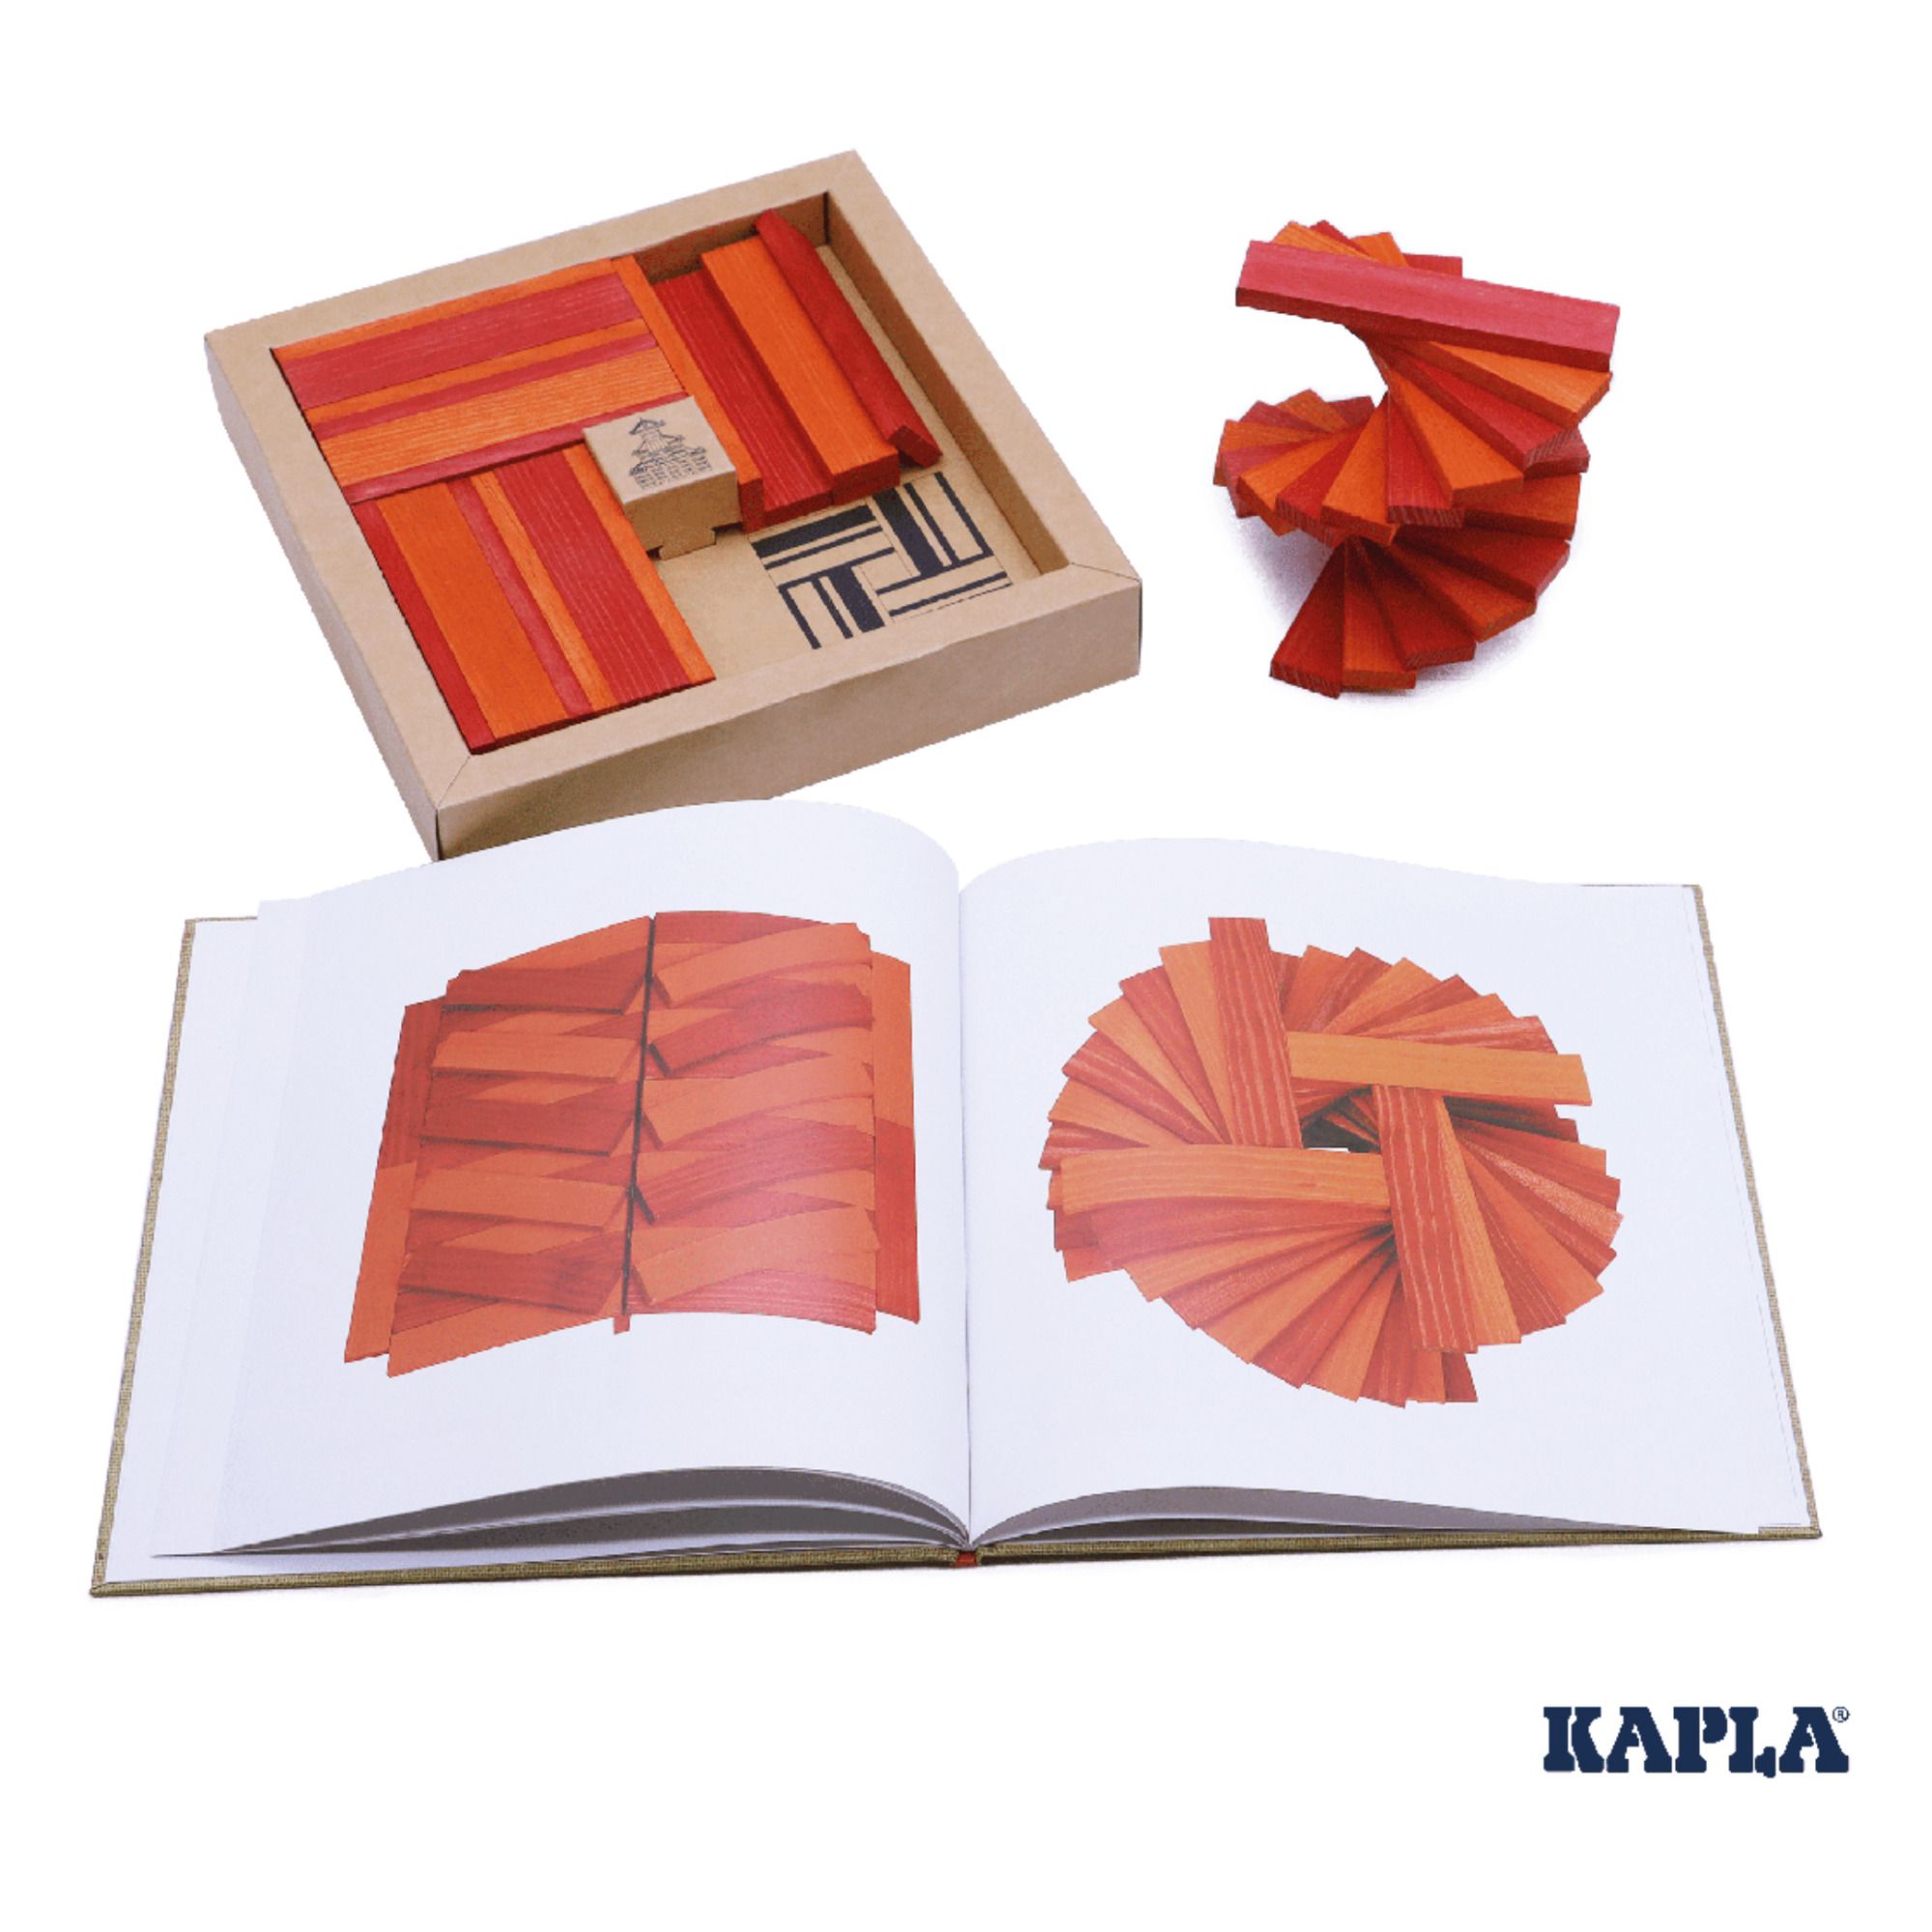 40 planchettes Kapla + livre